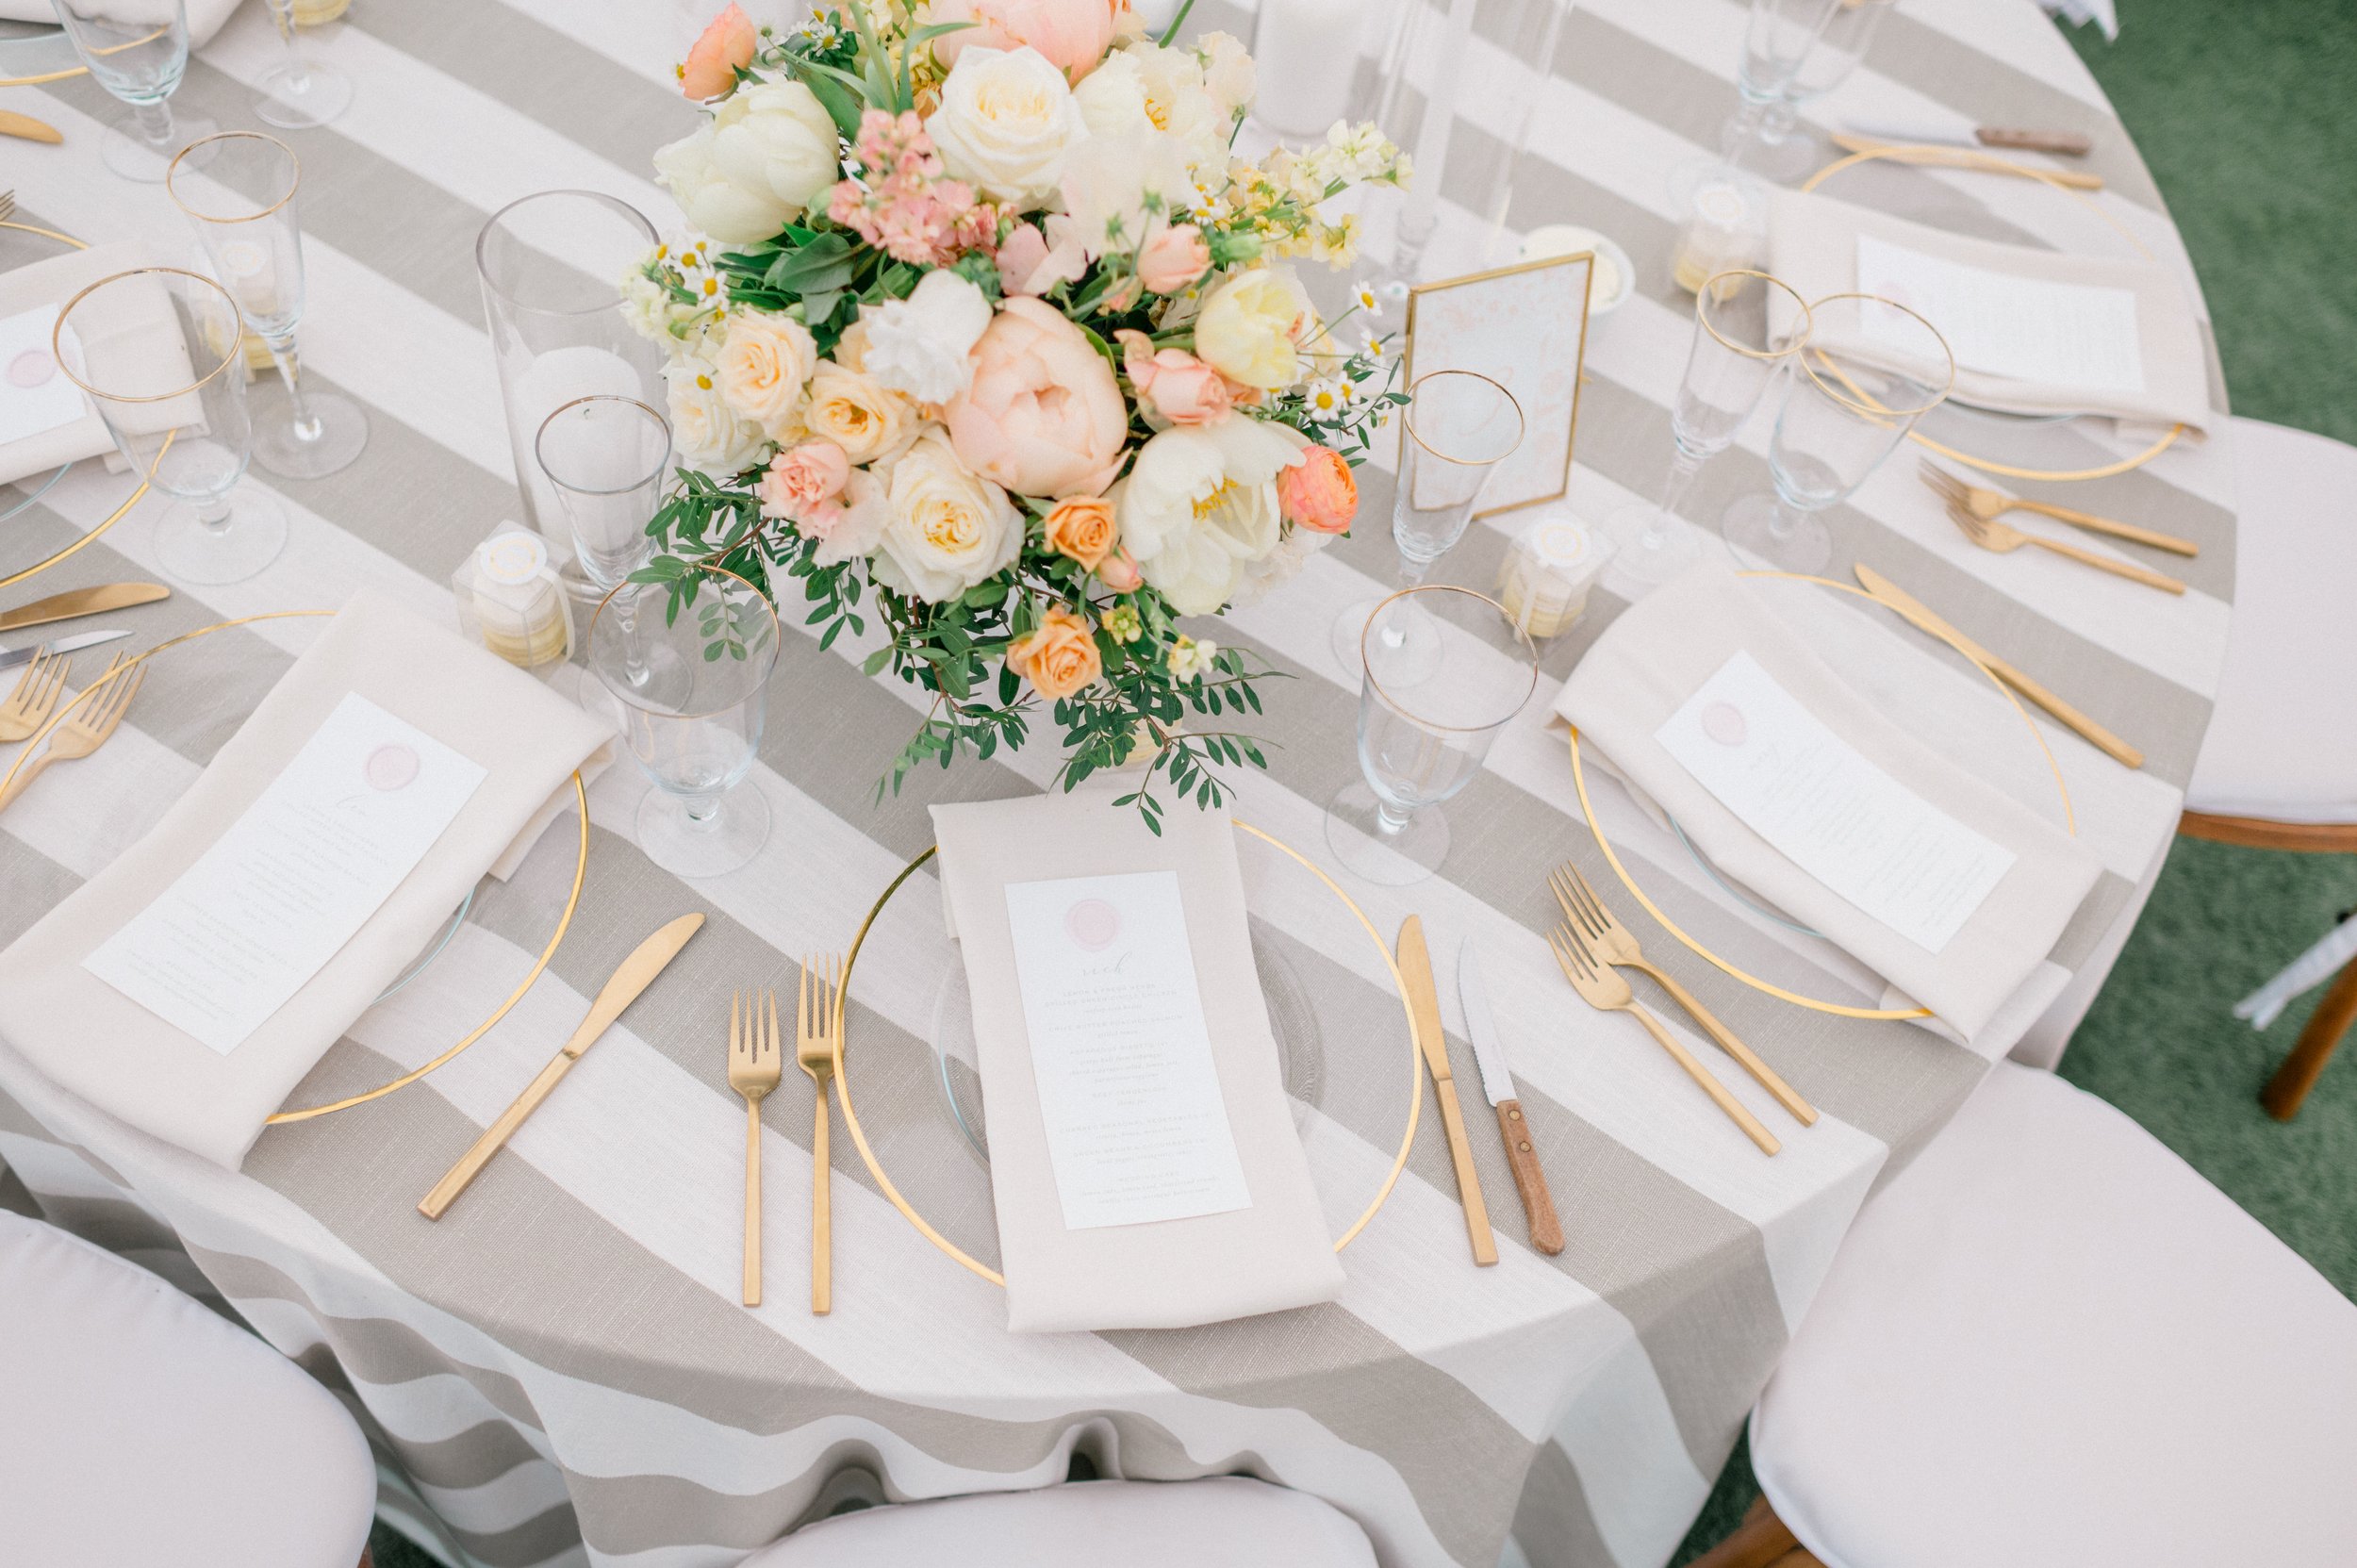 striped wedding linens and menus